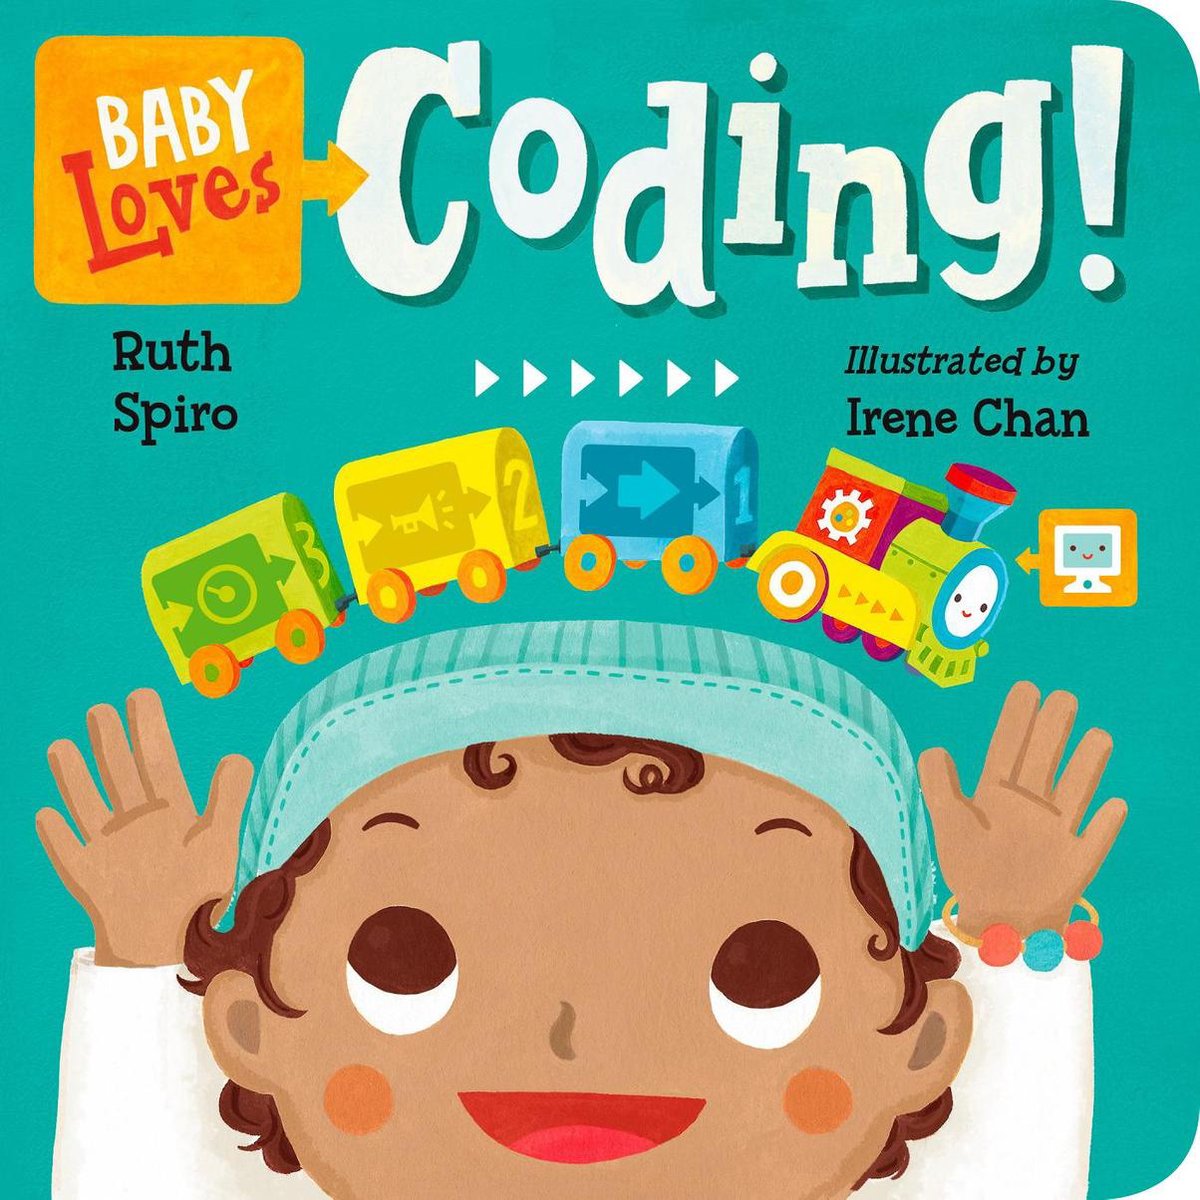 Baby Loves Coding! - Ruth Spiro